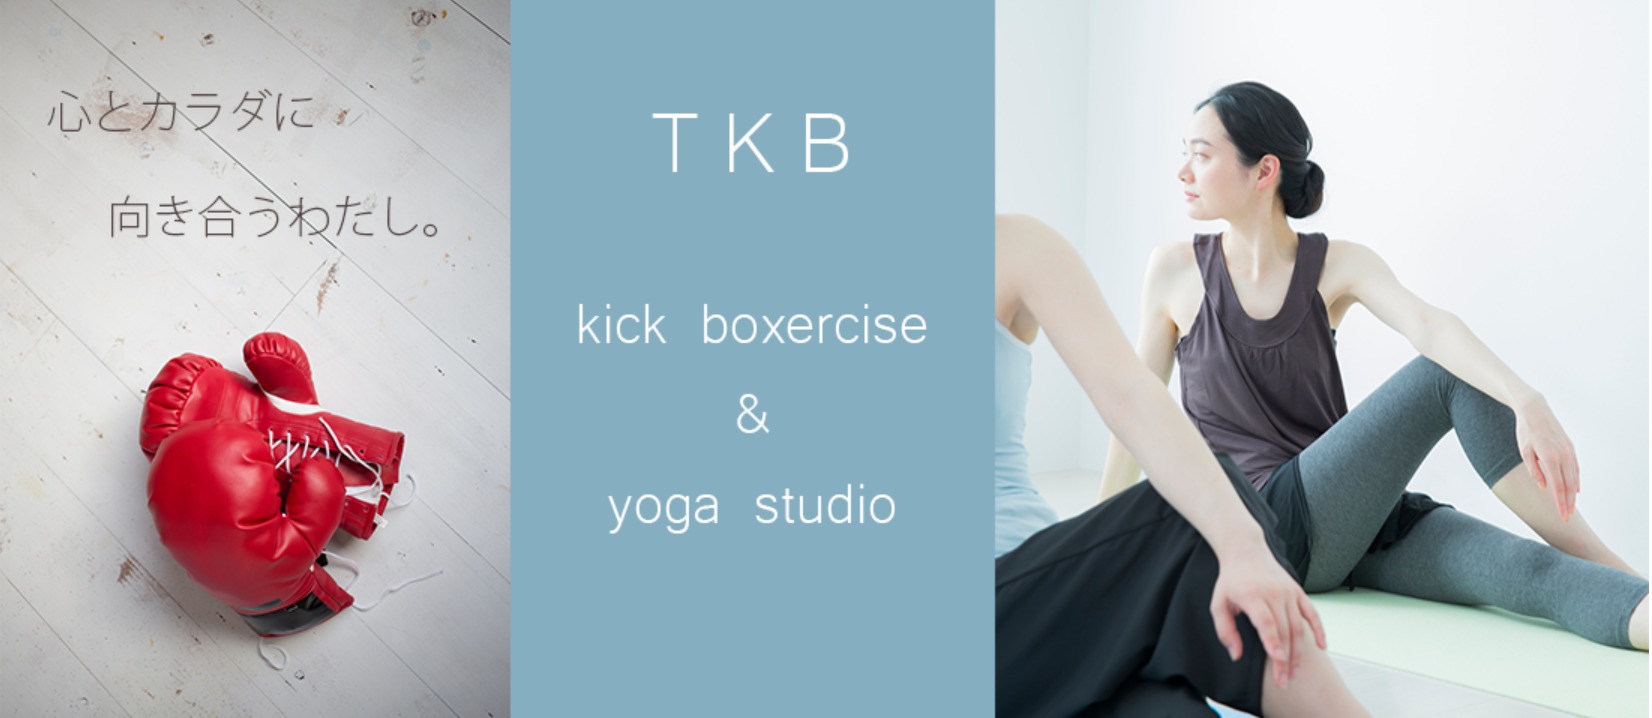 TKB kick boxercise & yoga studioの施設画像